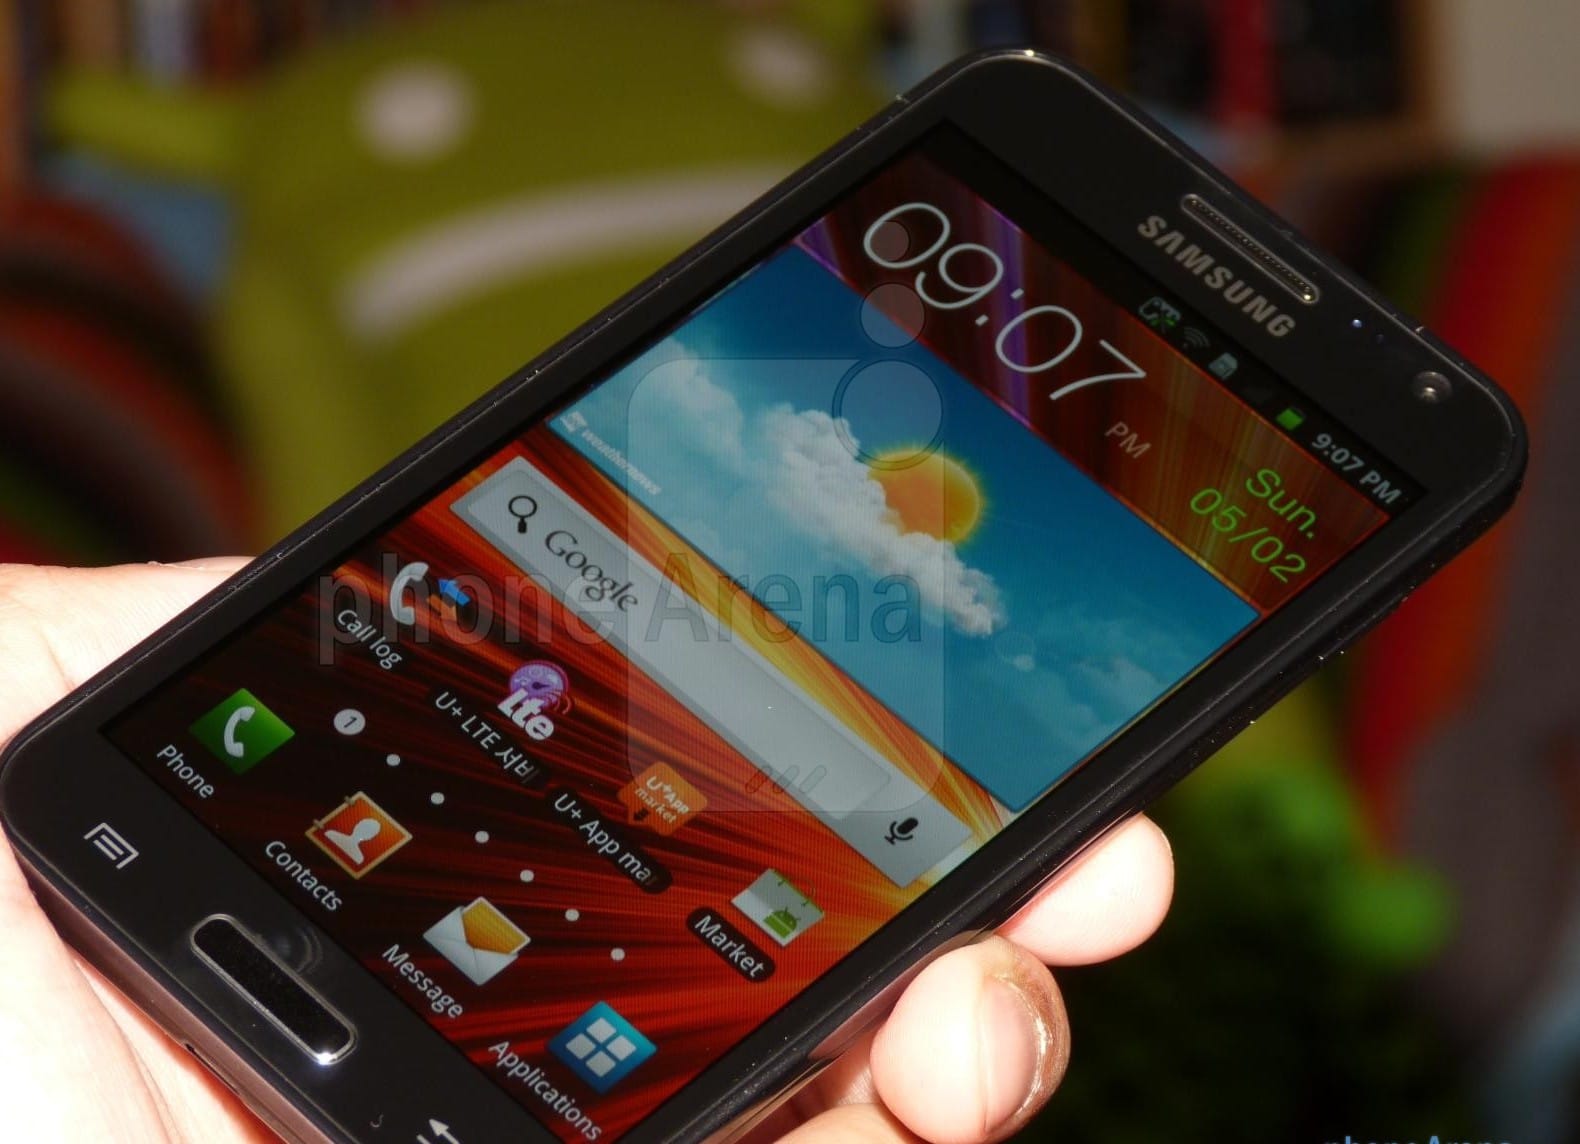 Samsung Galaxy S II LTE HD